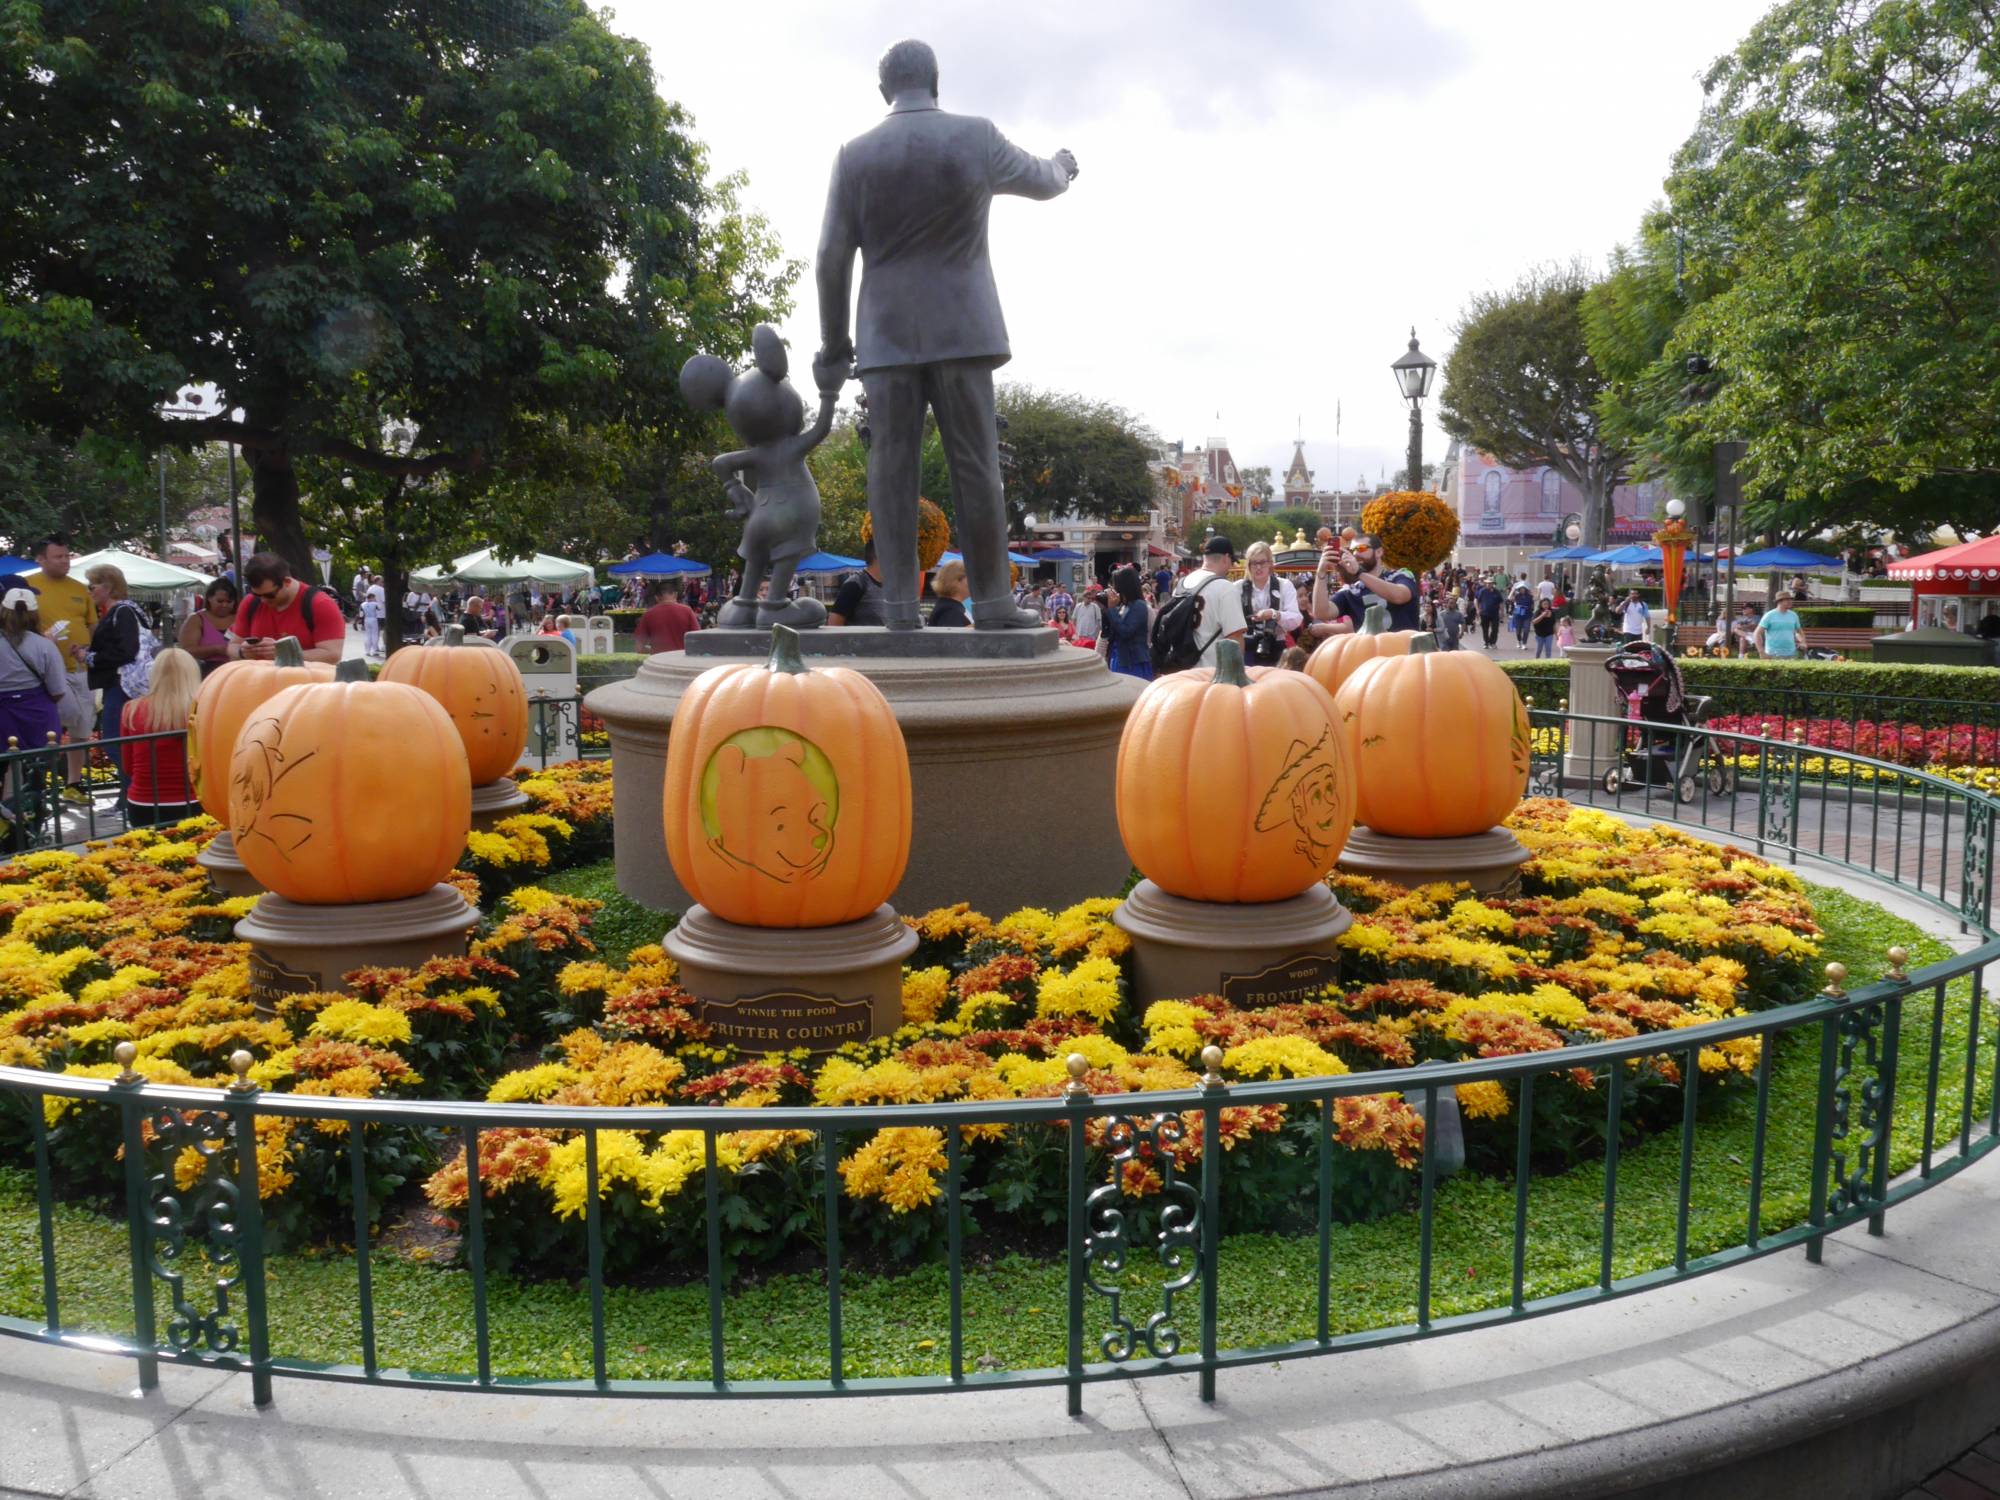 Enjoy Mickey's Halloween Party at Disneyland | PassPorter.com